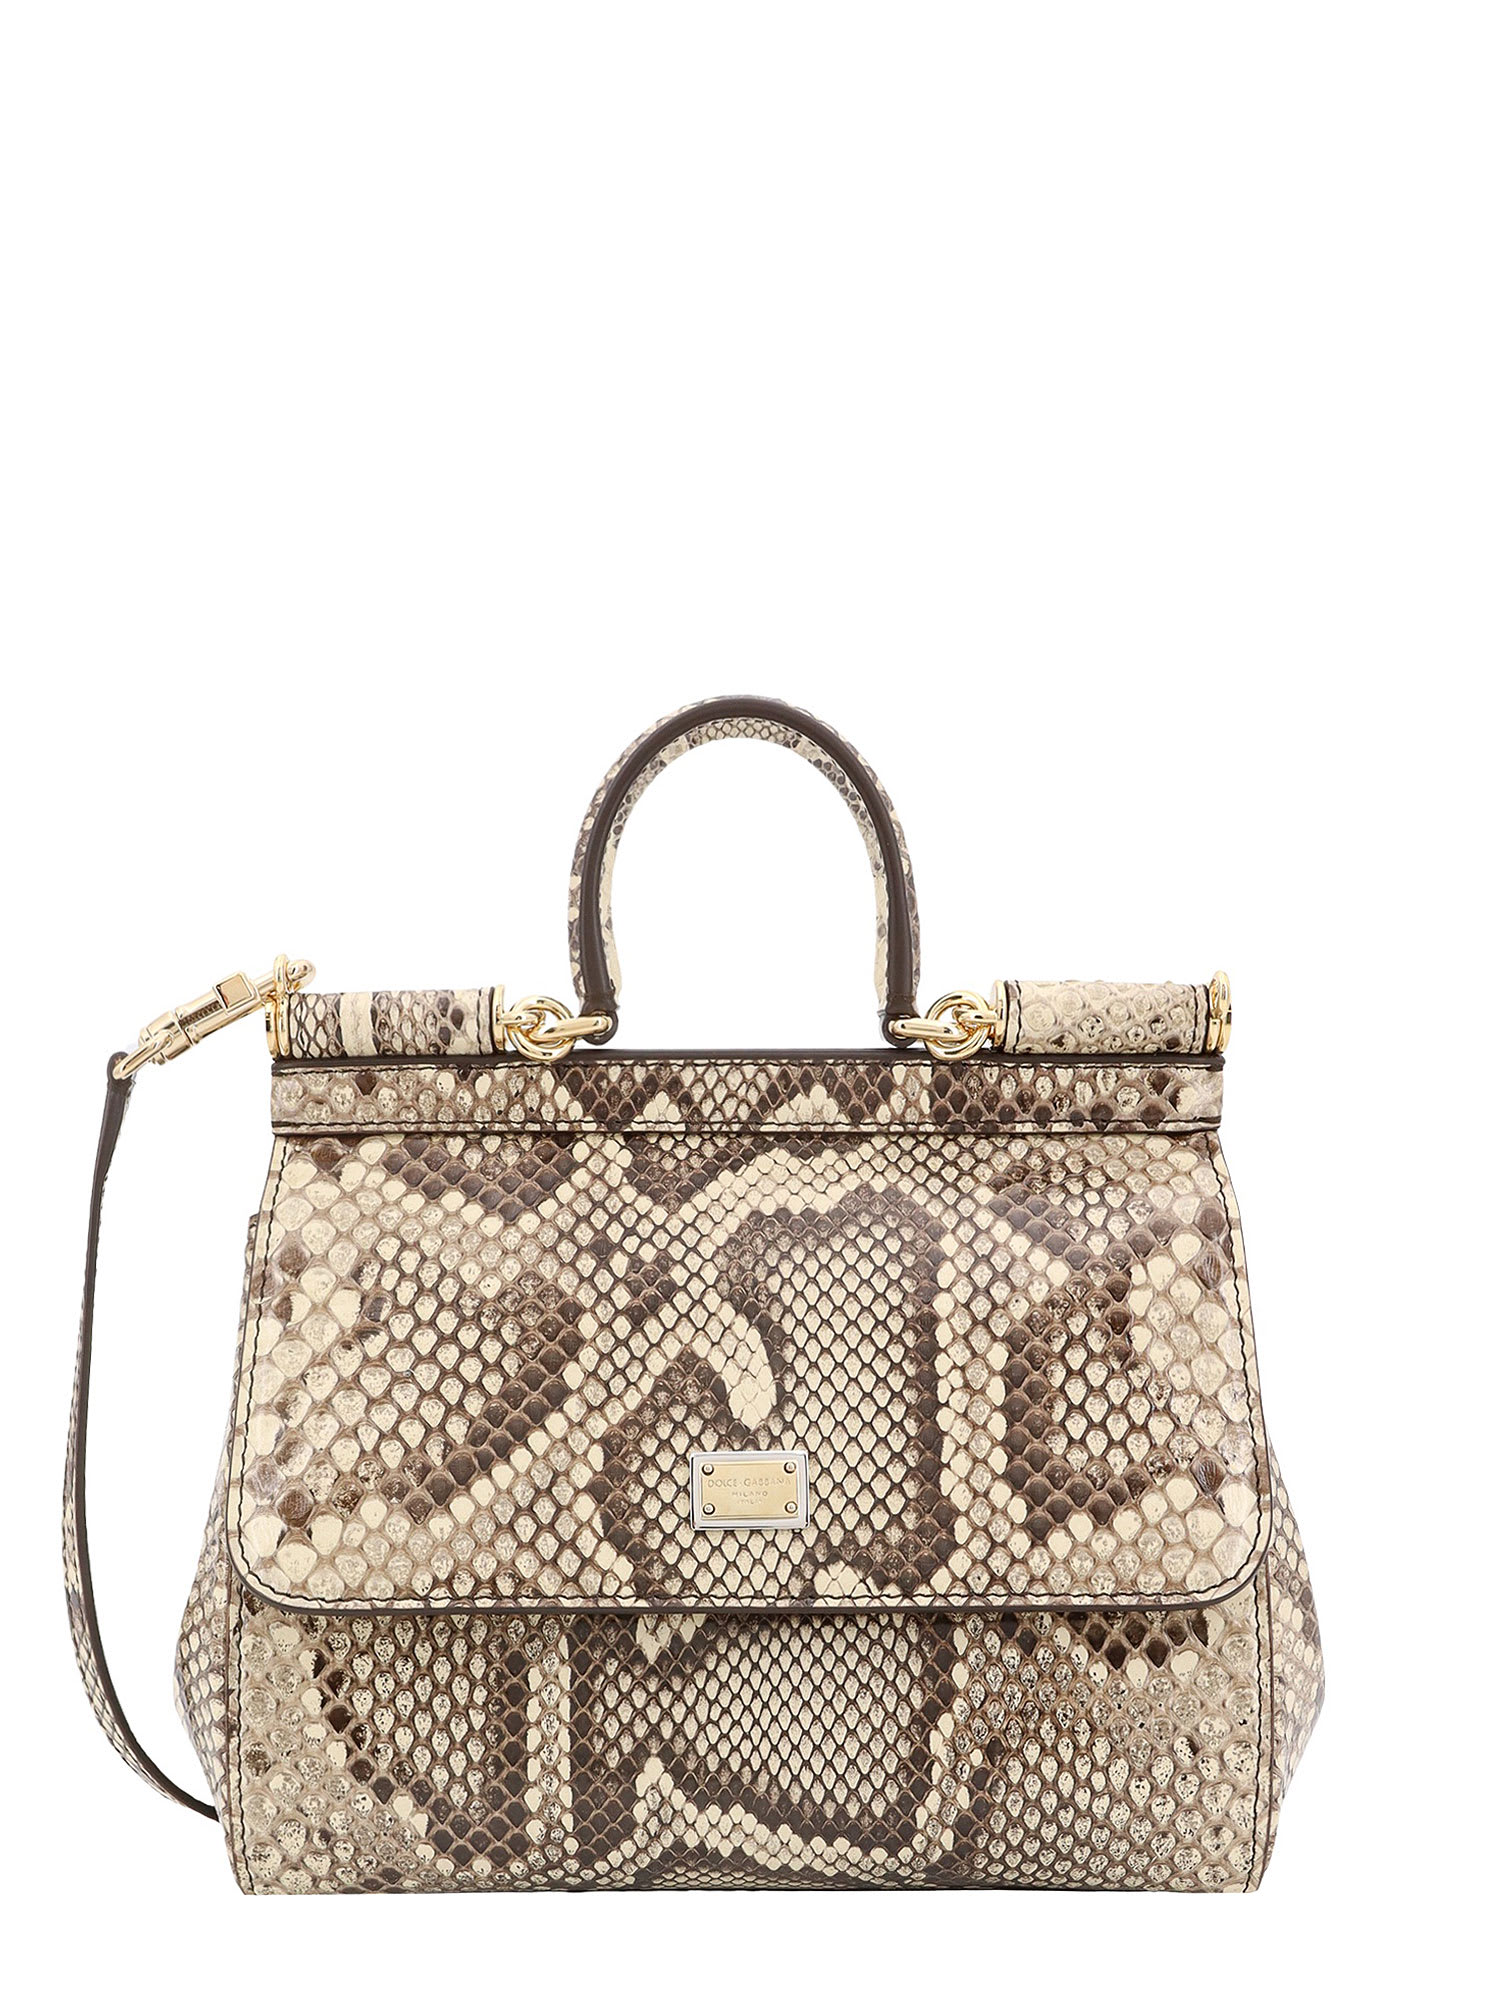 Dolce & Gabbana Sicily Handbag In Brown